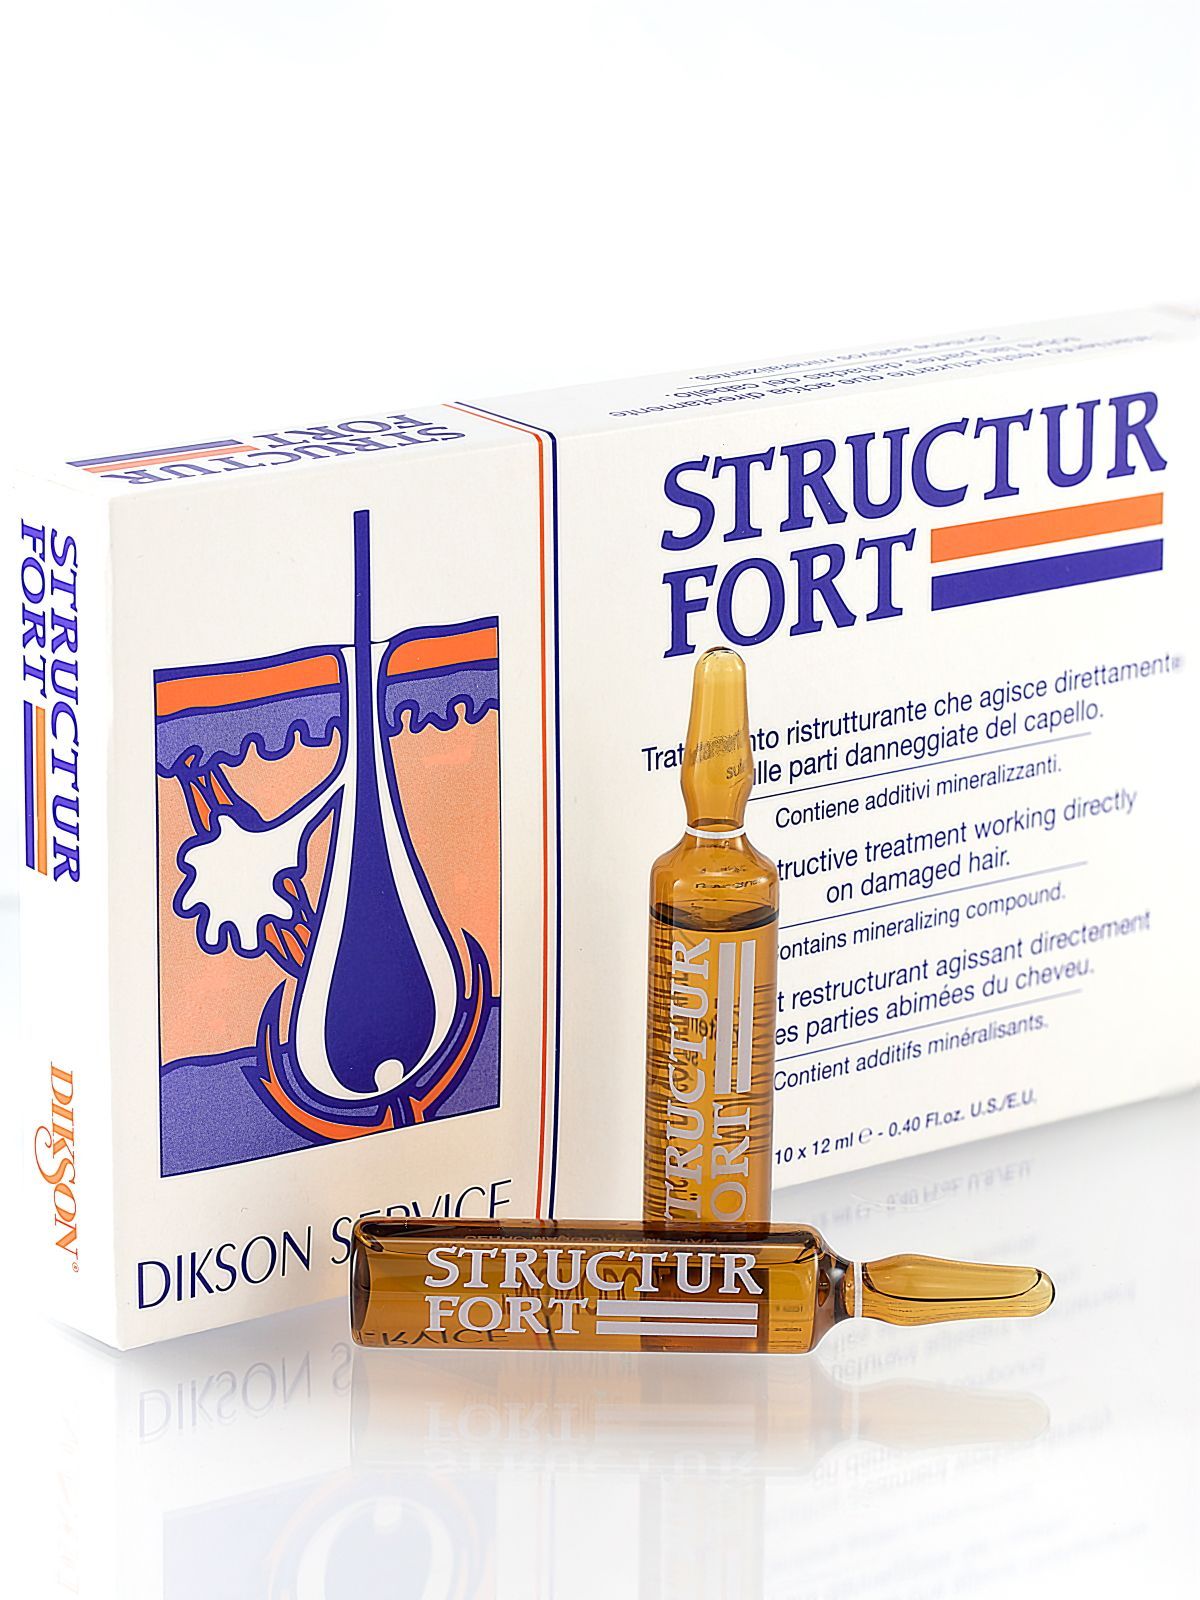 Structur fort. Dikson structur Fort препарат, 10х12мл. Dikson ампулы для восстановления волос structur Fort 12. Dikson ампулы для восстановления волос, 10х12мл. Ампулы для волос Dikson service structur Fort.